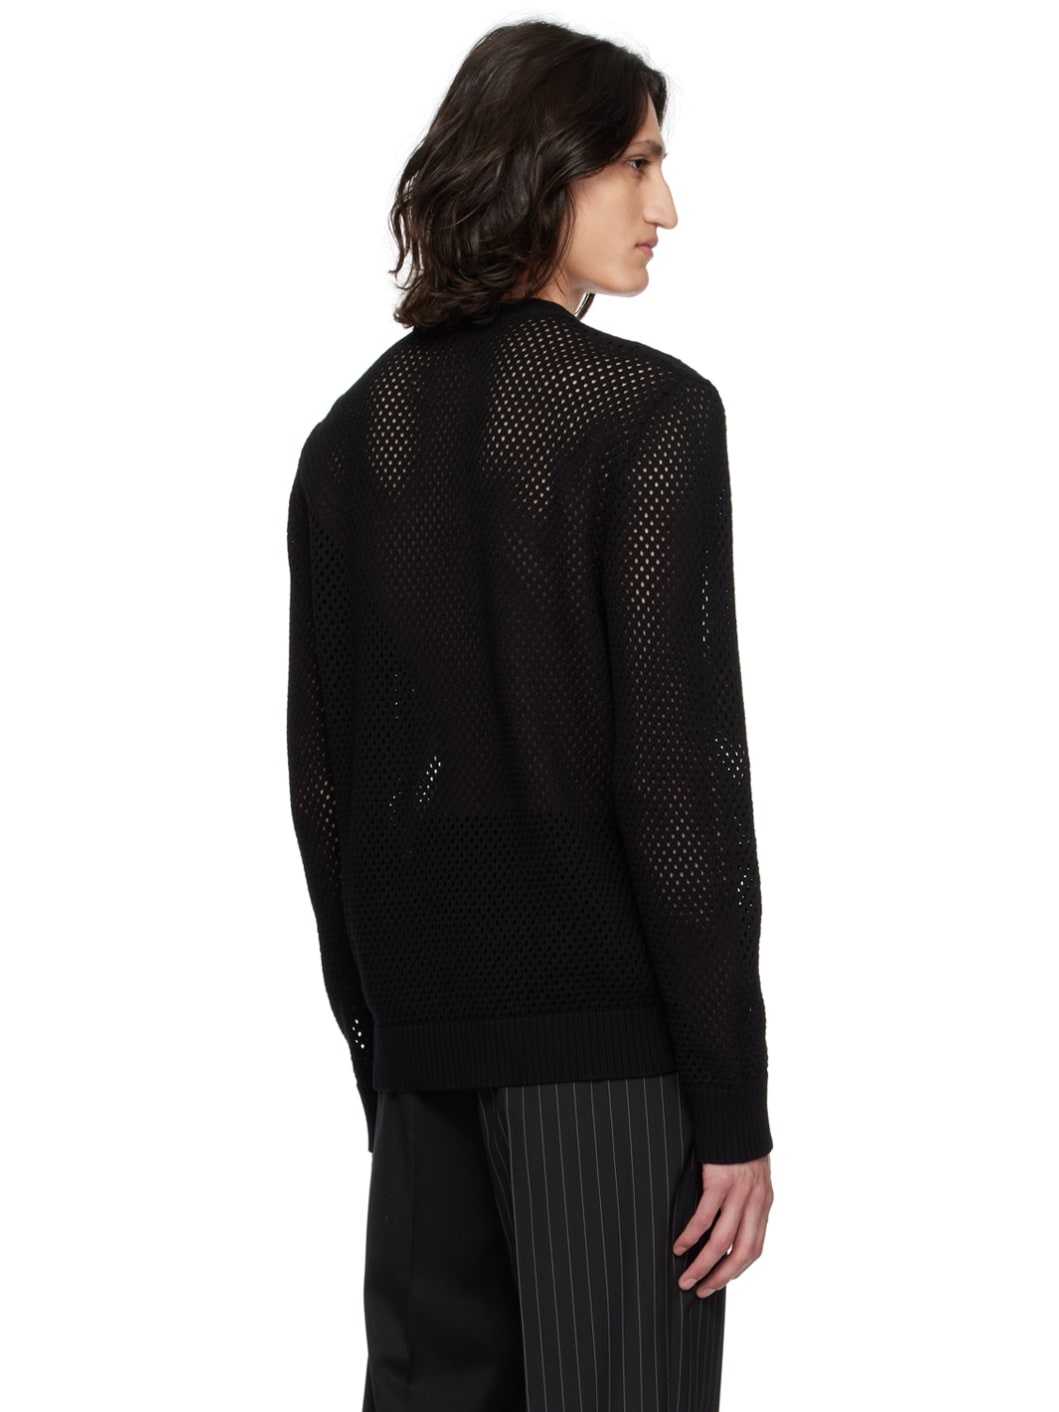 Black Jacquard Sweater - 3